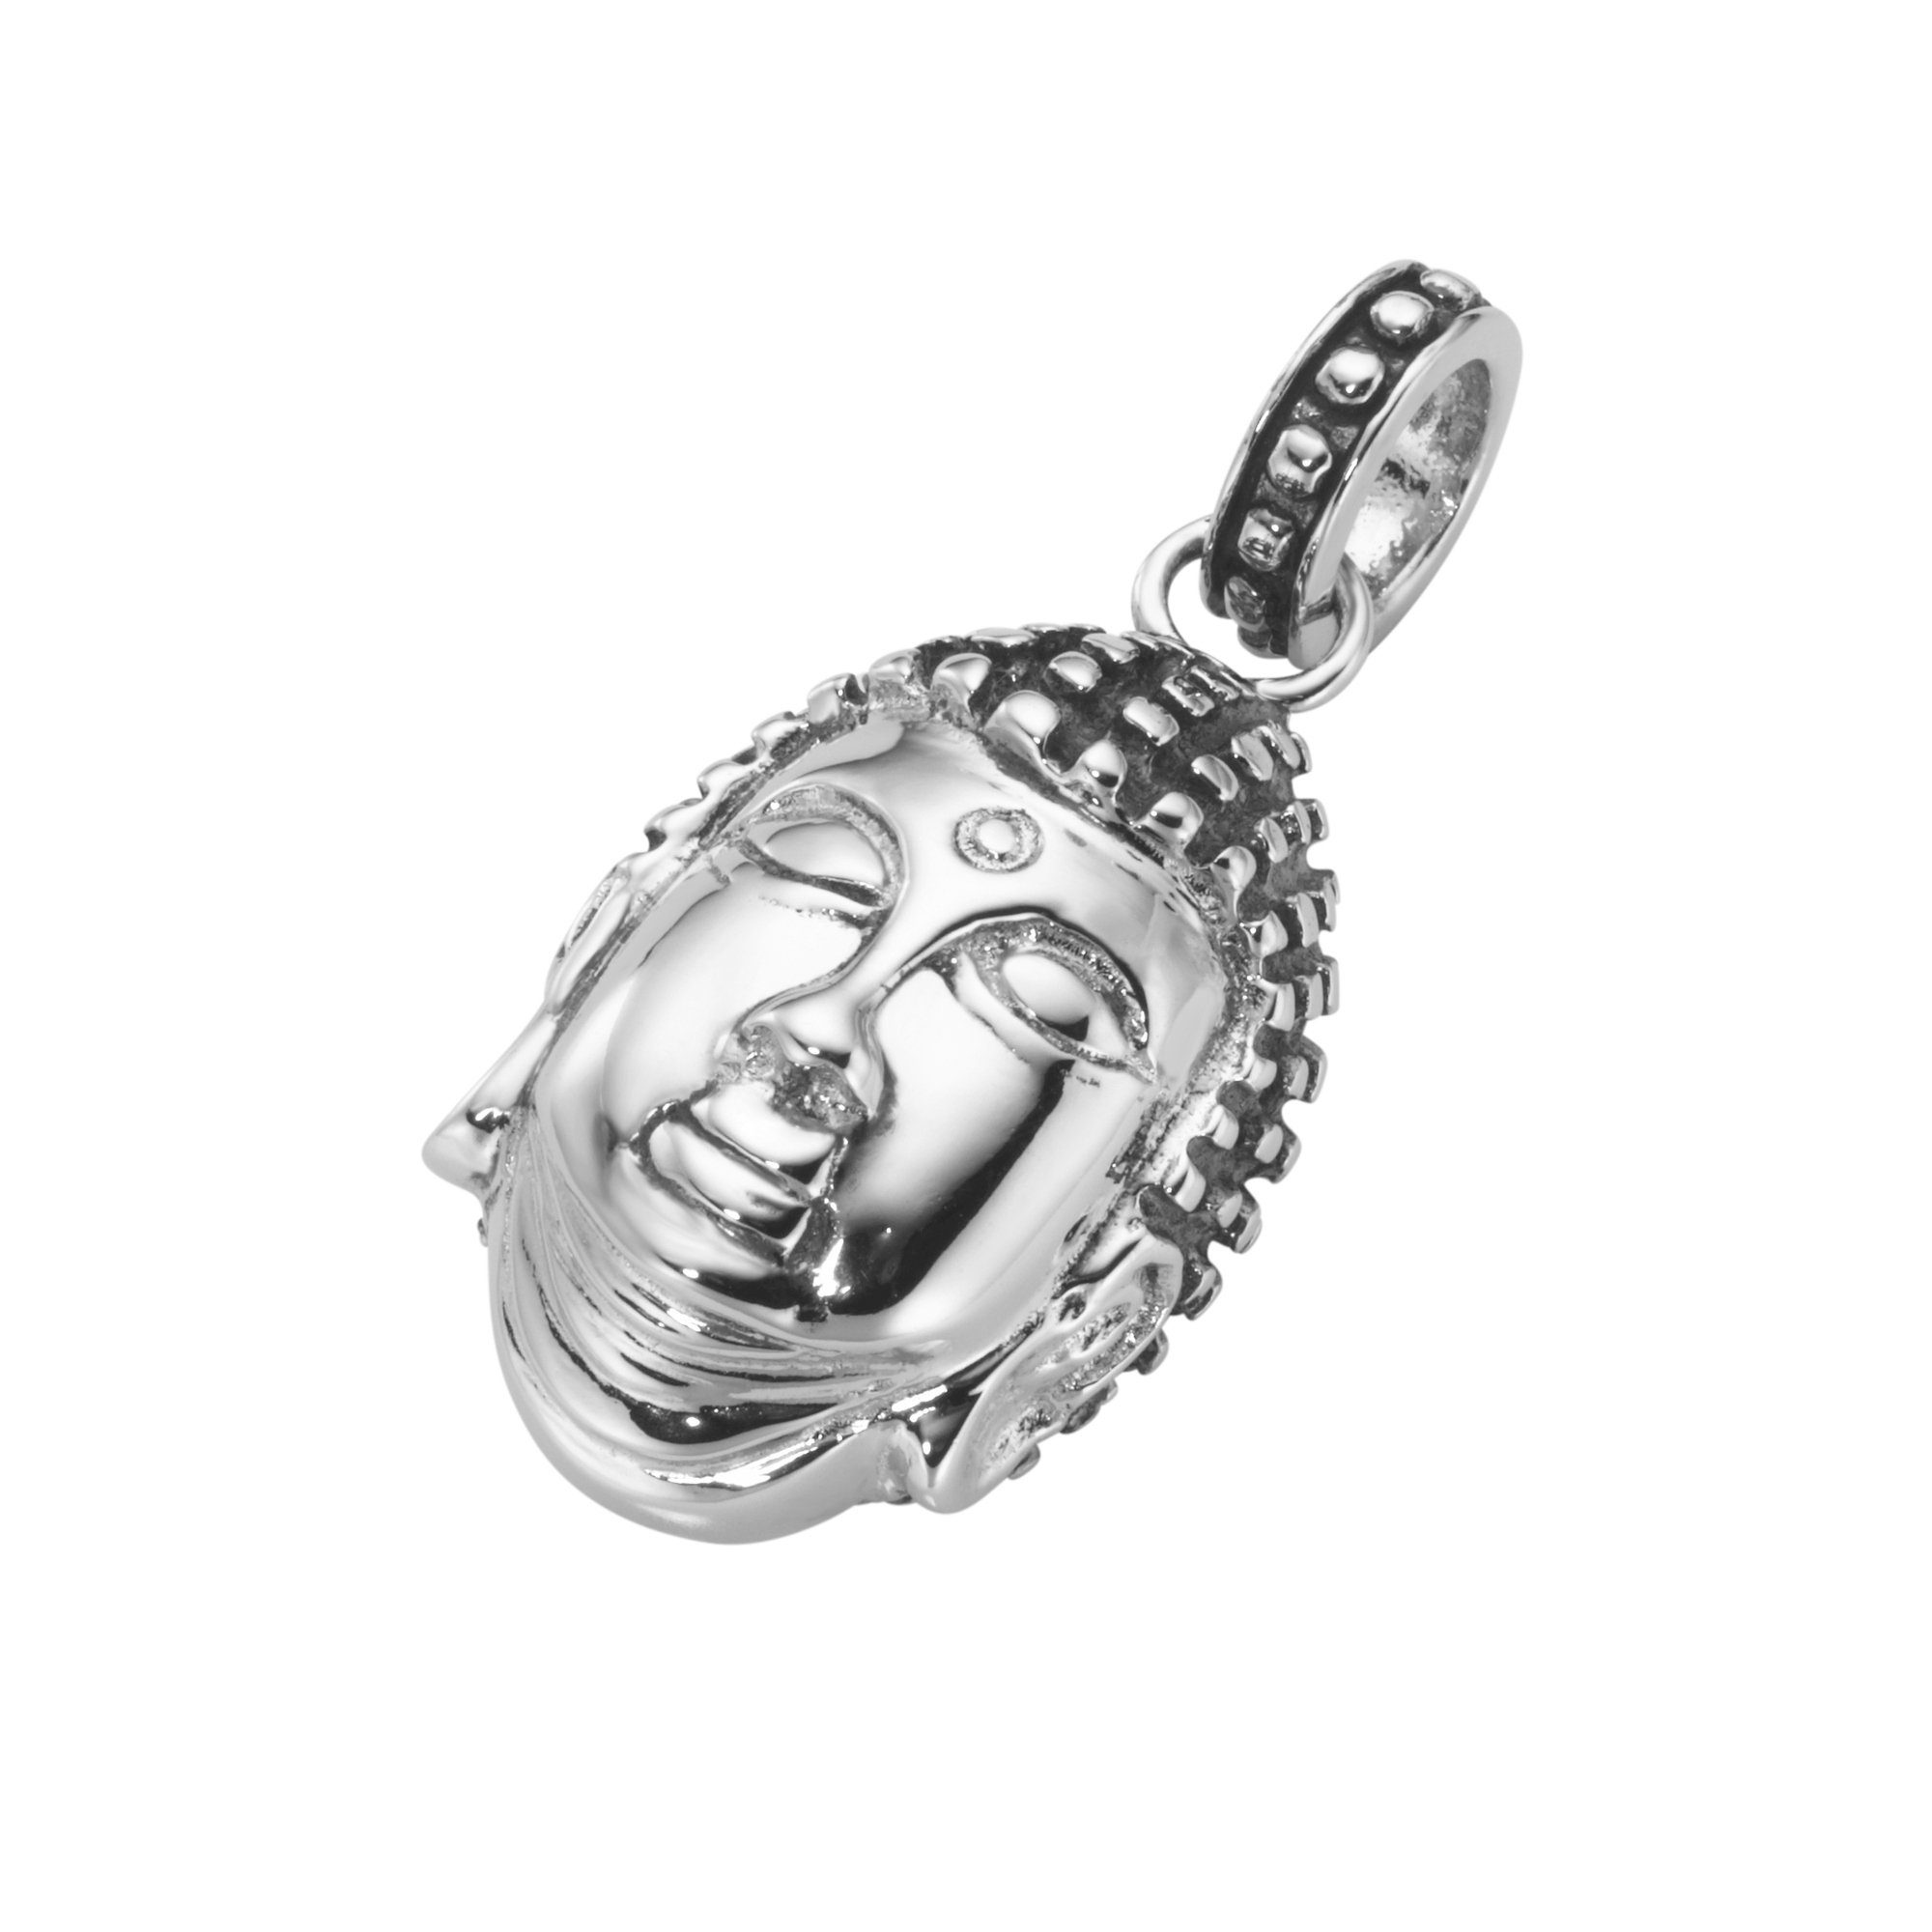 GIORGIO MARTELLO MILANO Kettenanhänger Buddha-Kopf, teilweise geschwärzt | Kettenanhänger